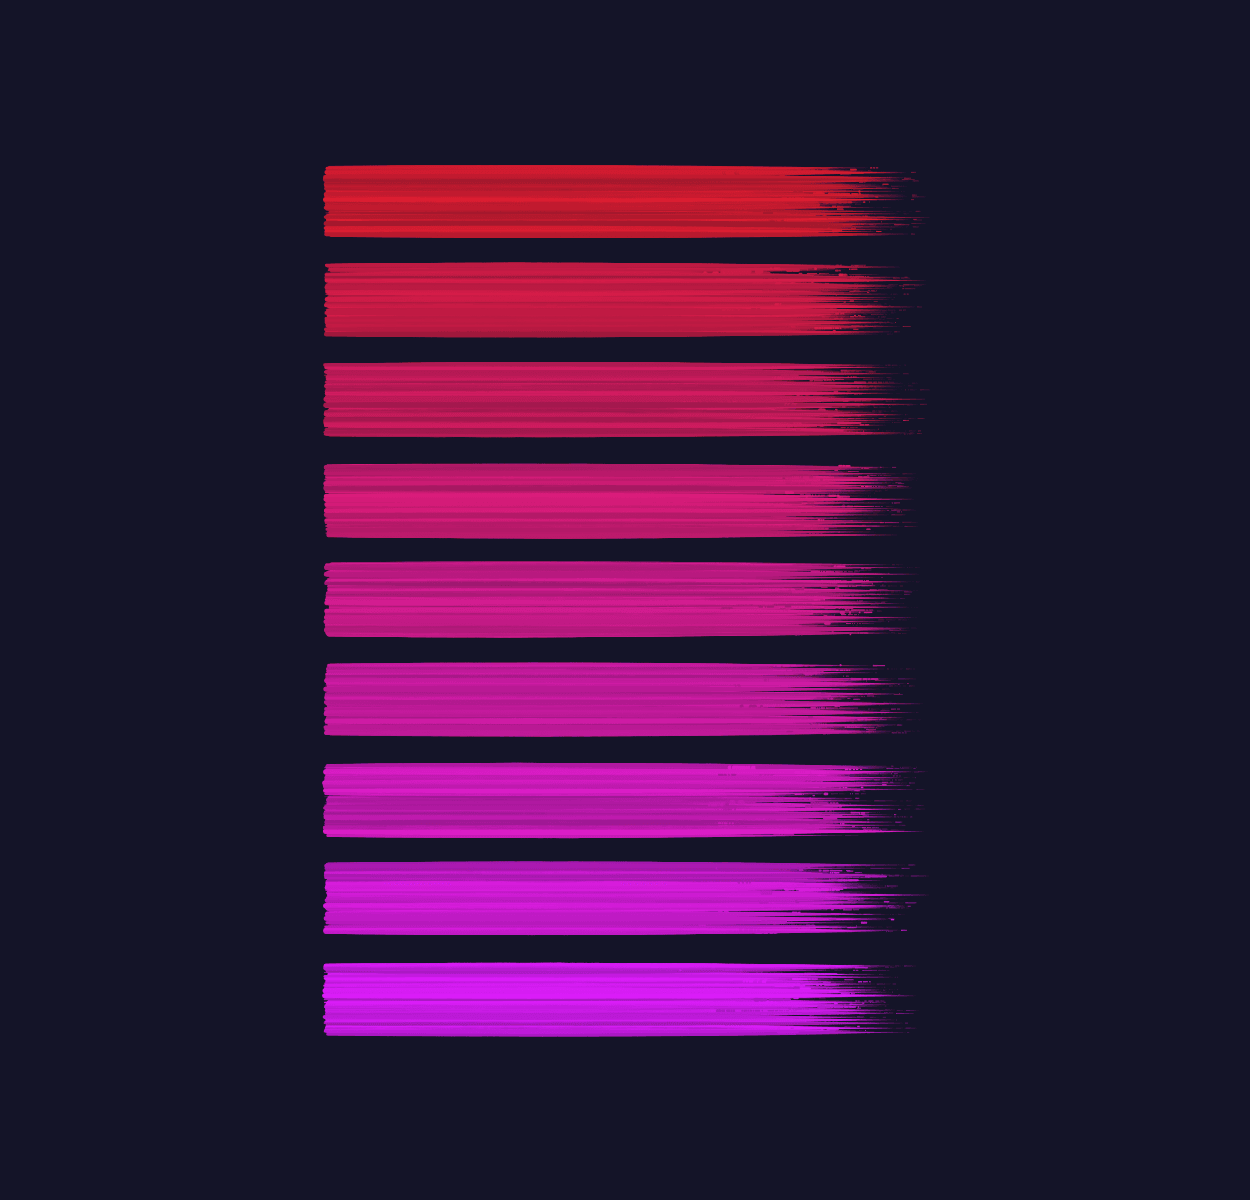 Nine individual horizontal brush strokes from red to purple